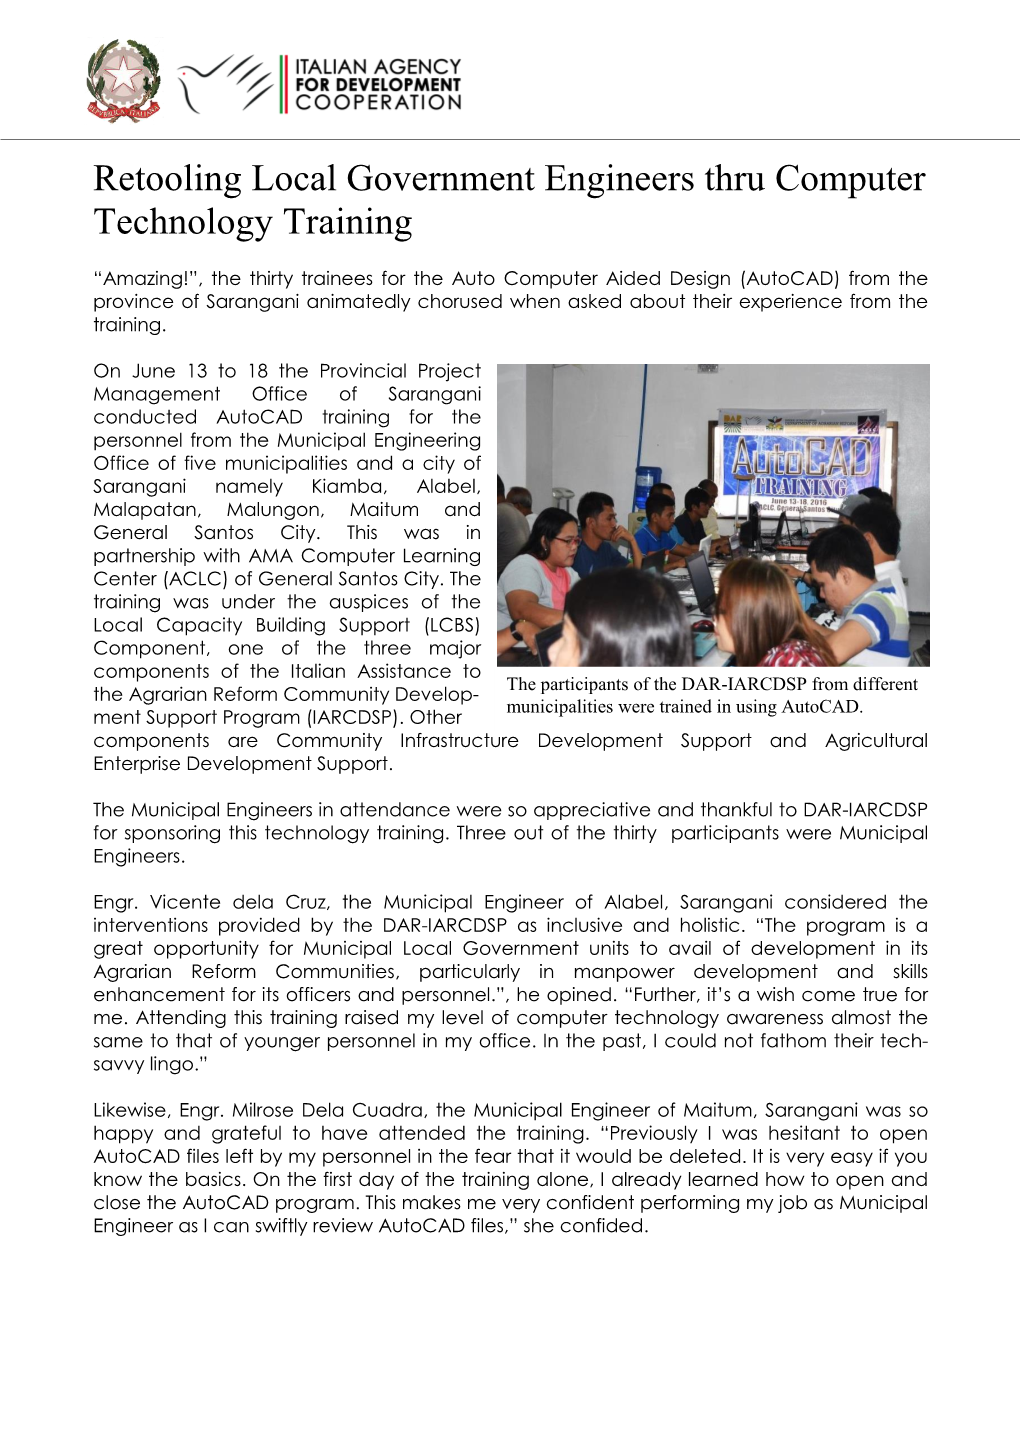 Retooling Local Government Engineers Thru Computer Technology Training